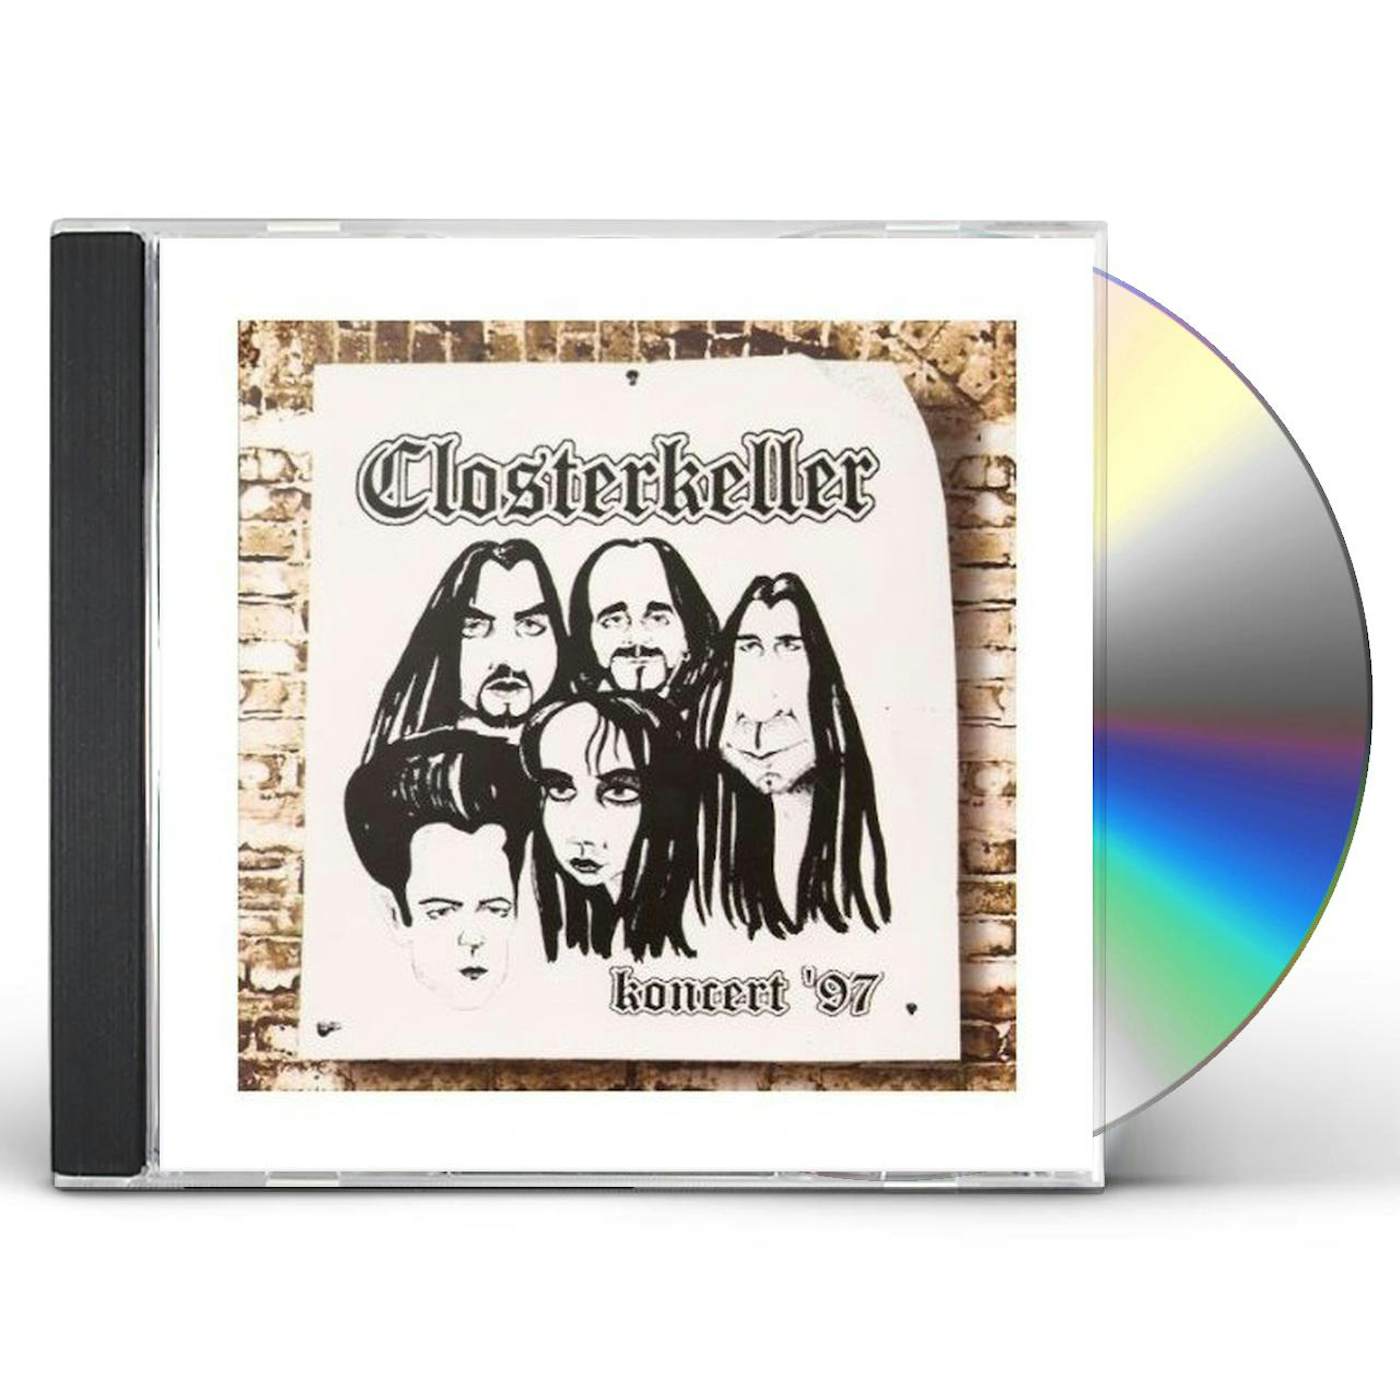 Closterkeller KONCERT '97 CD